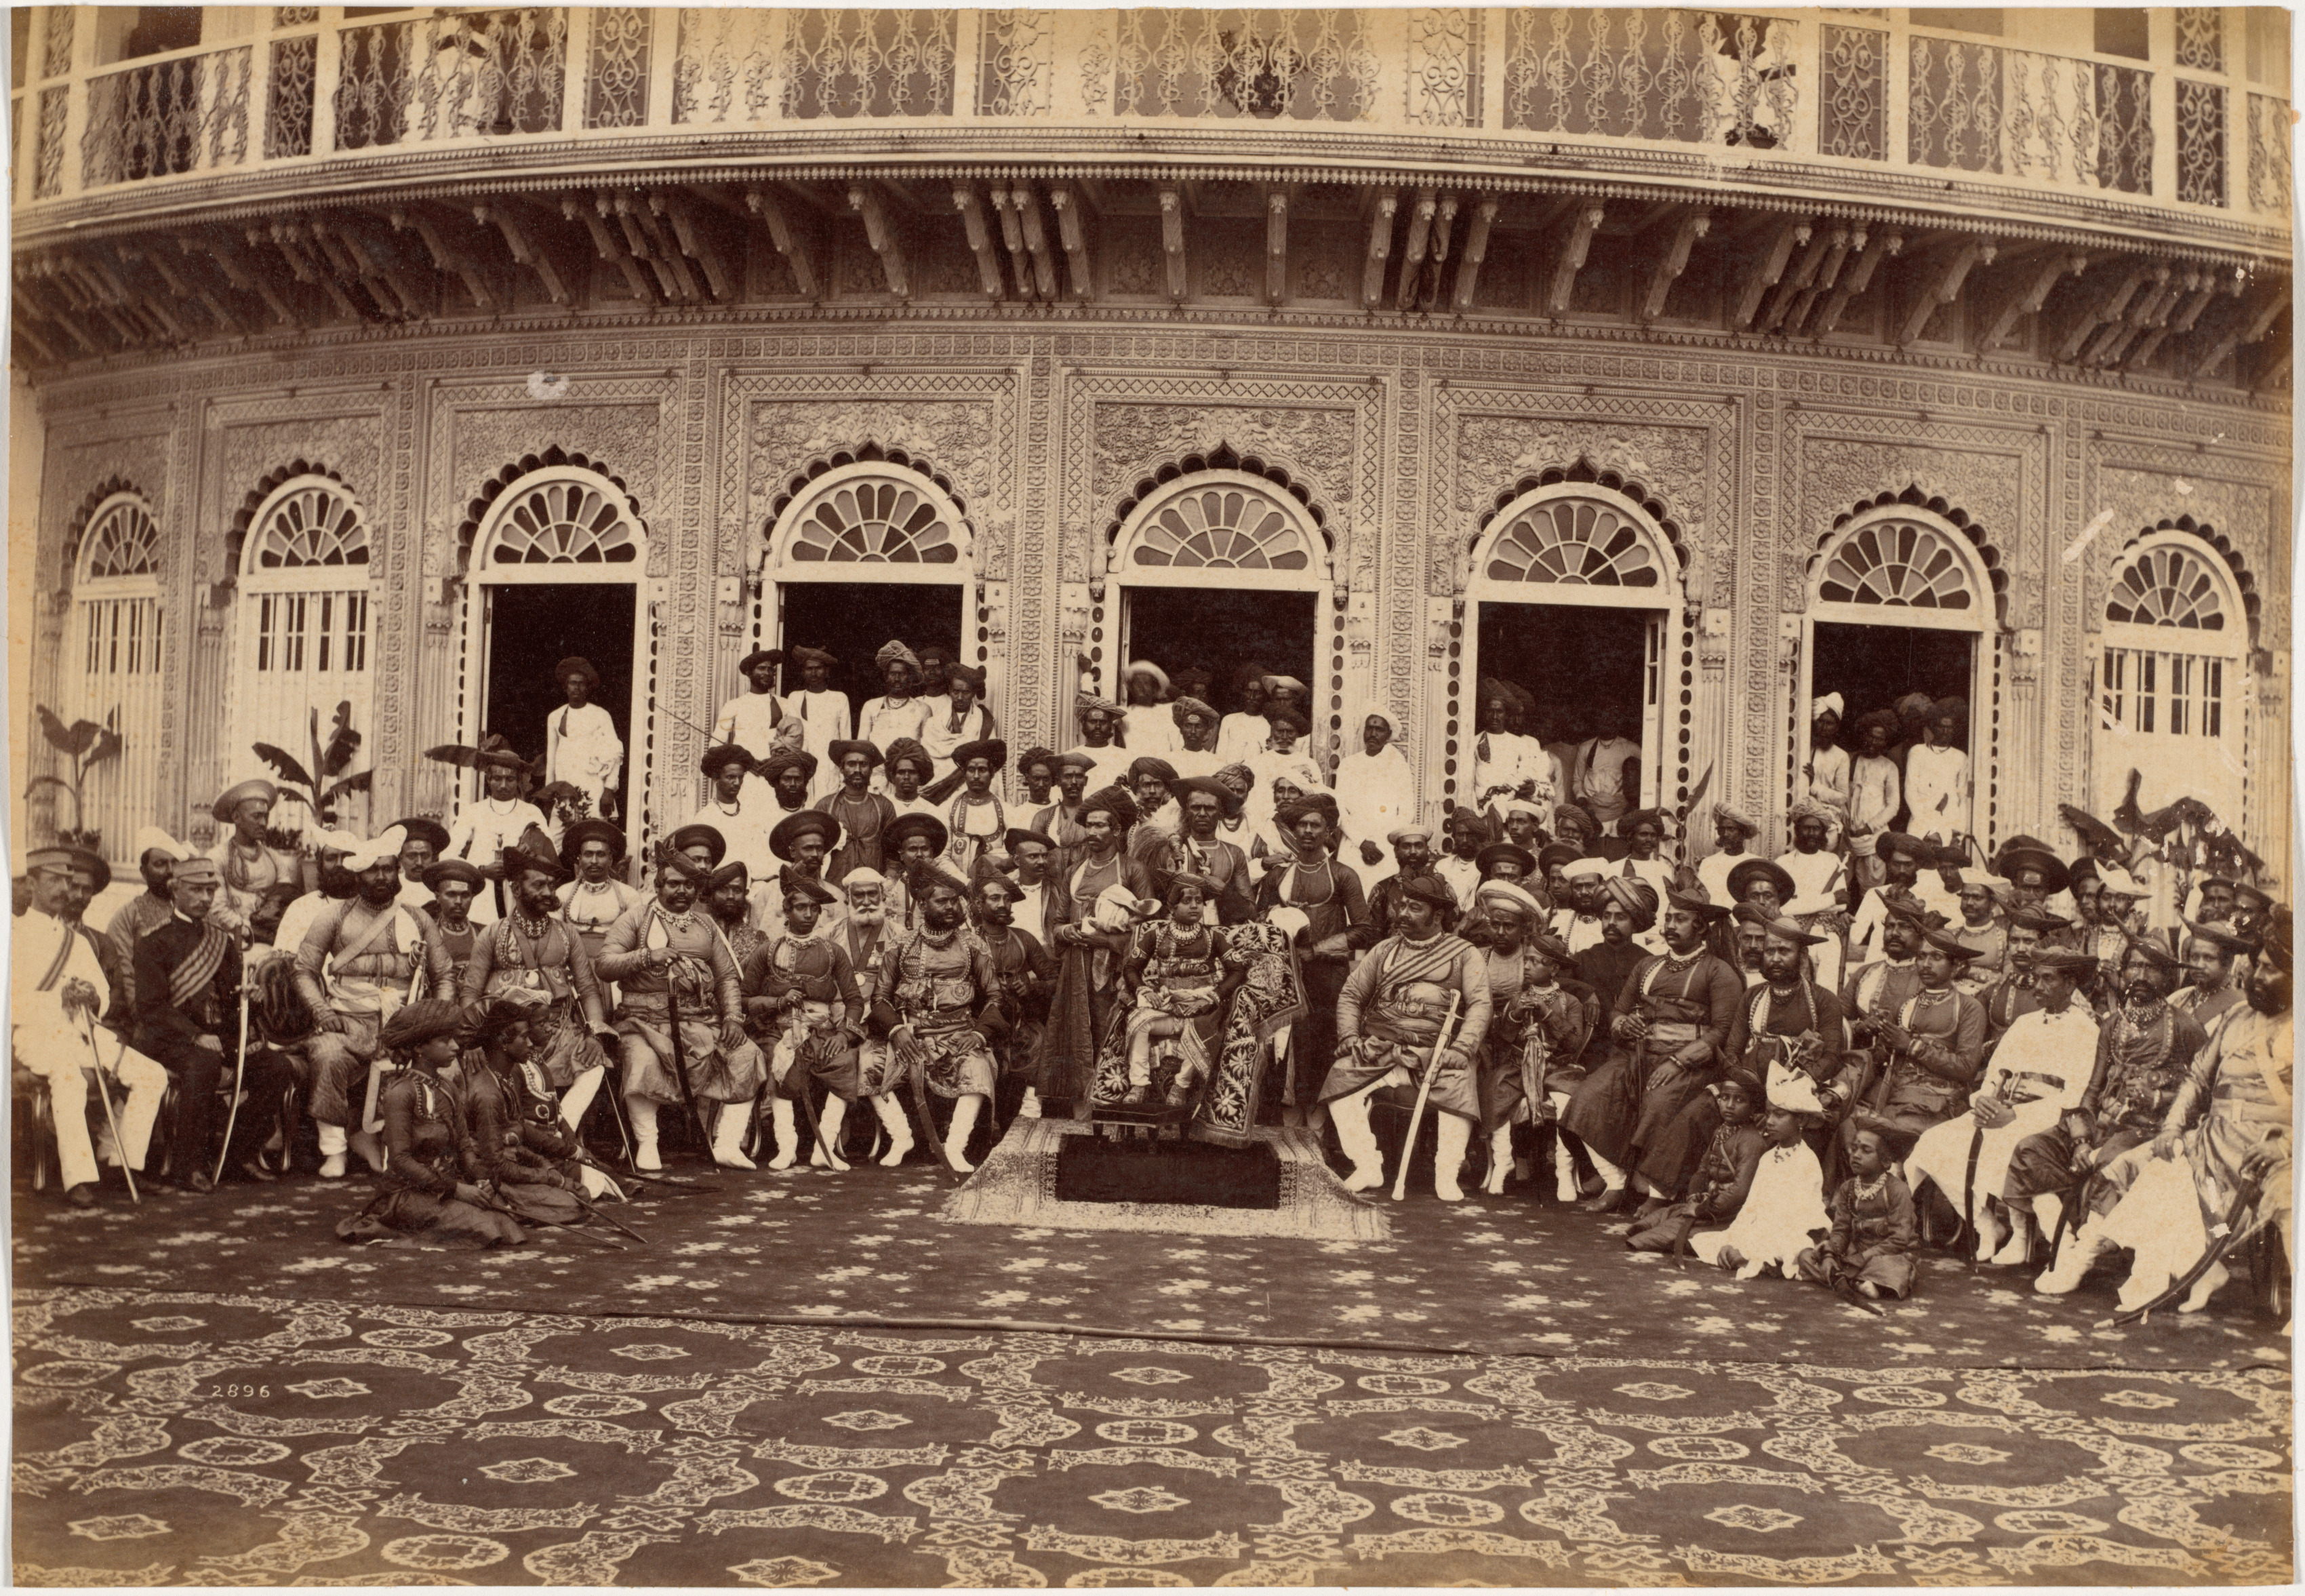 Maharaja Scindia, Nobles, and High Officials, Gwalior